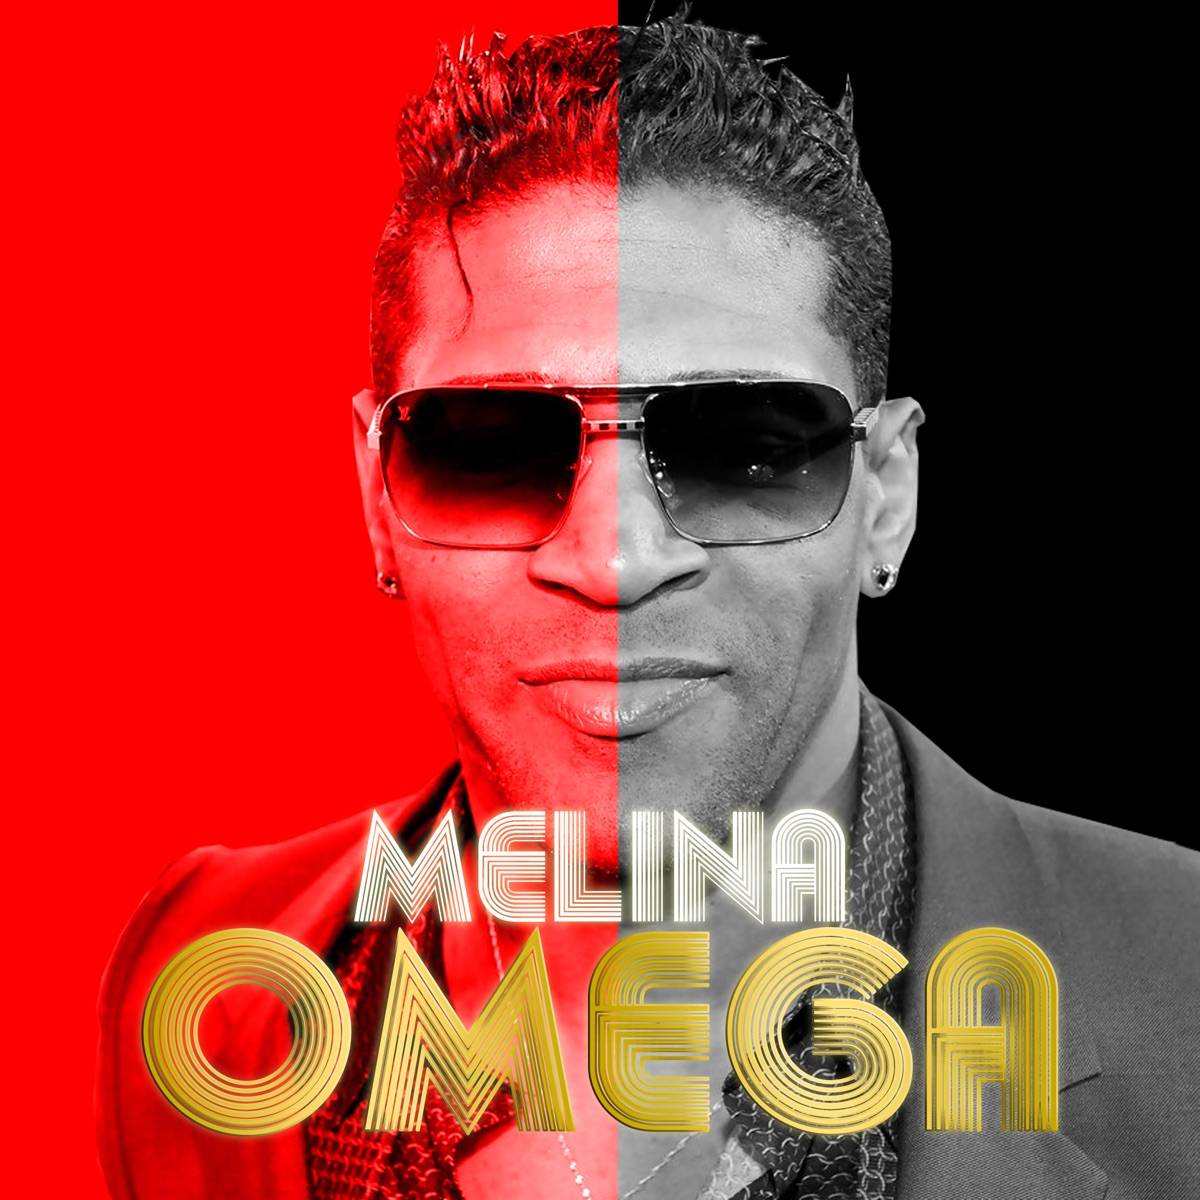 Pegao / Me Miro y La Mire - Single (Cuban Deejays Remix) de Omega & Cuban  Deejays en Apple Music